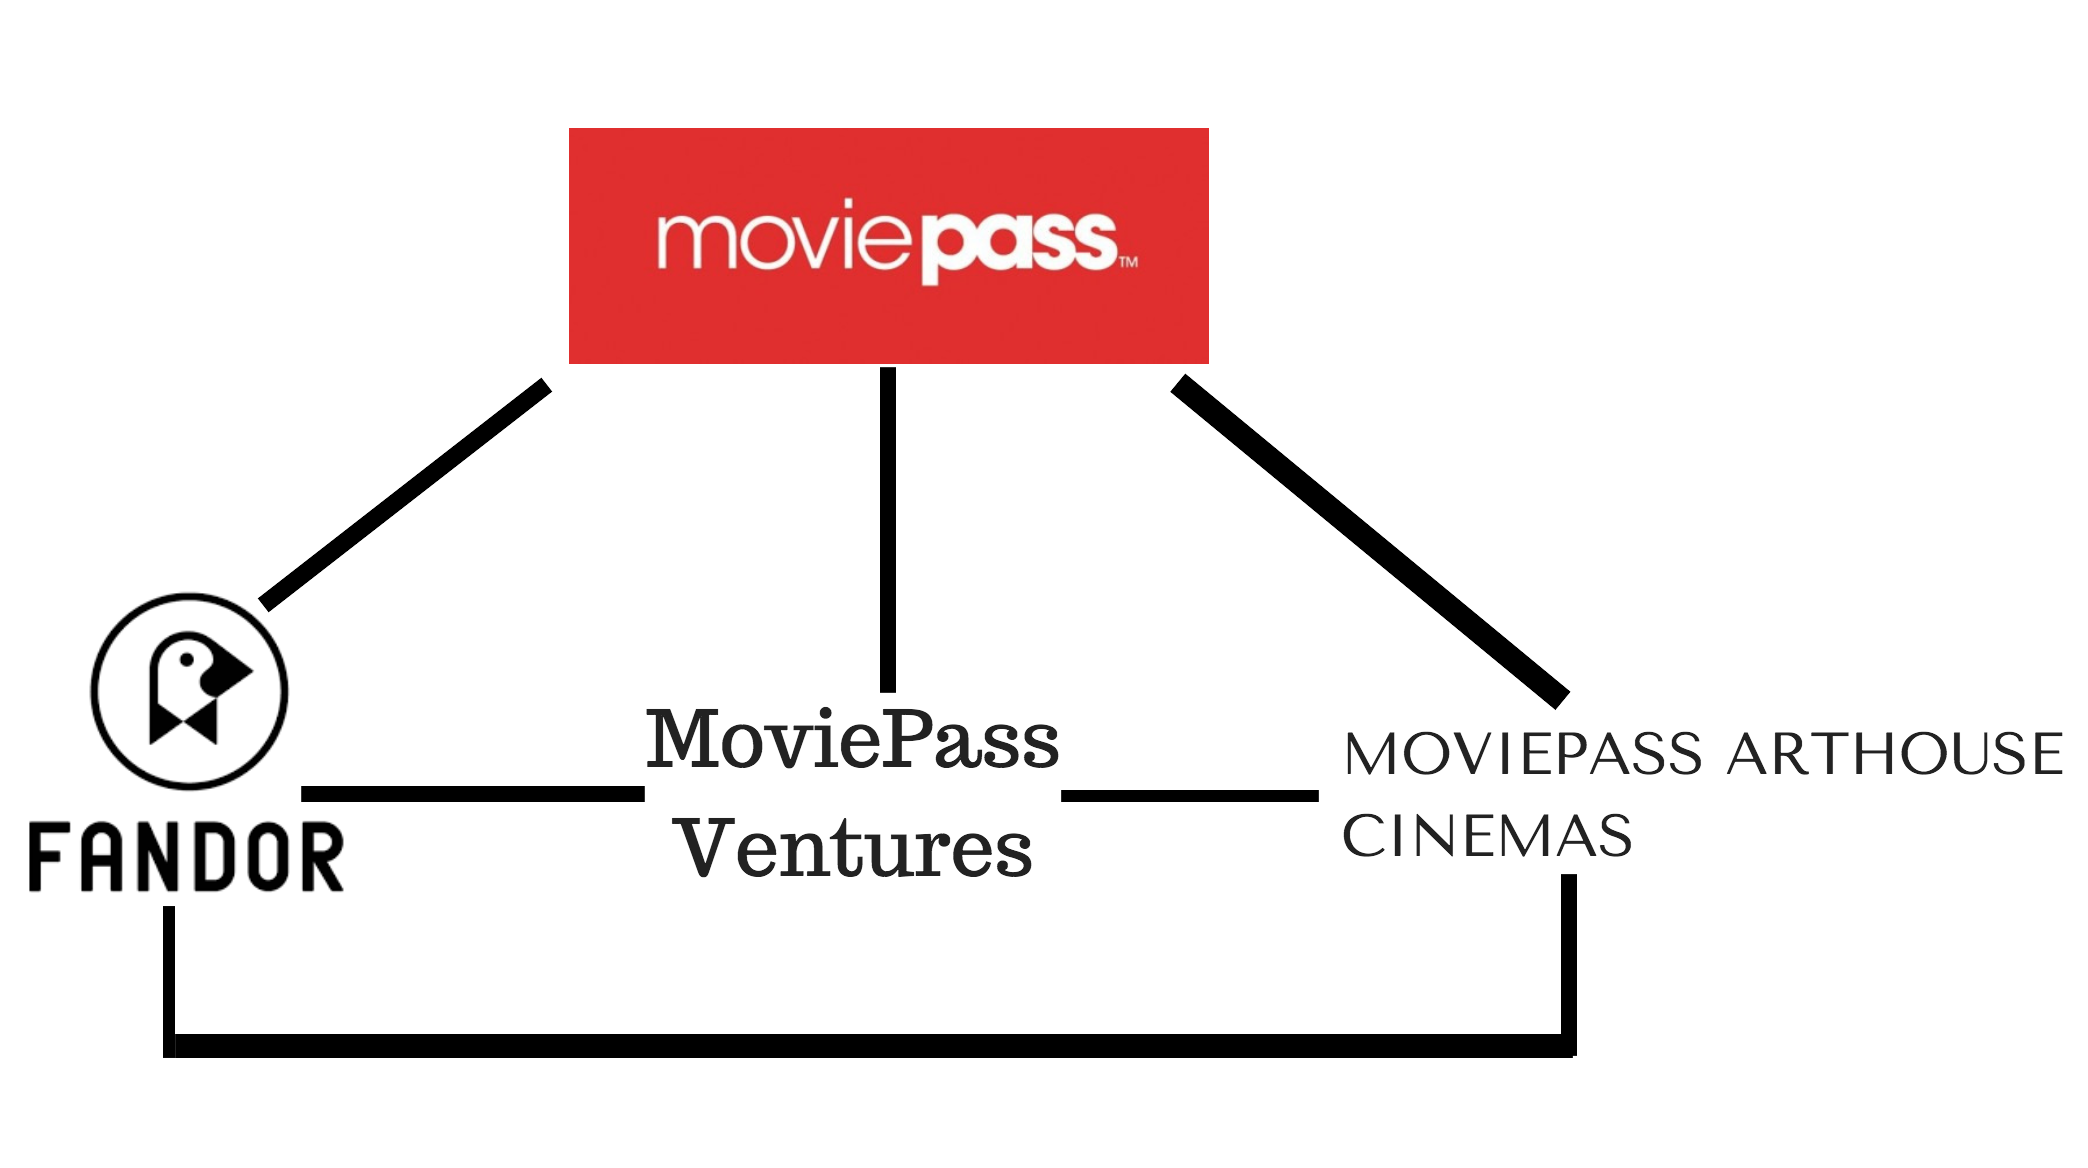 moviepass stocks